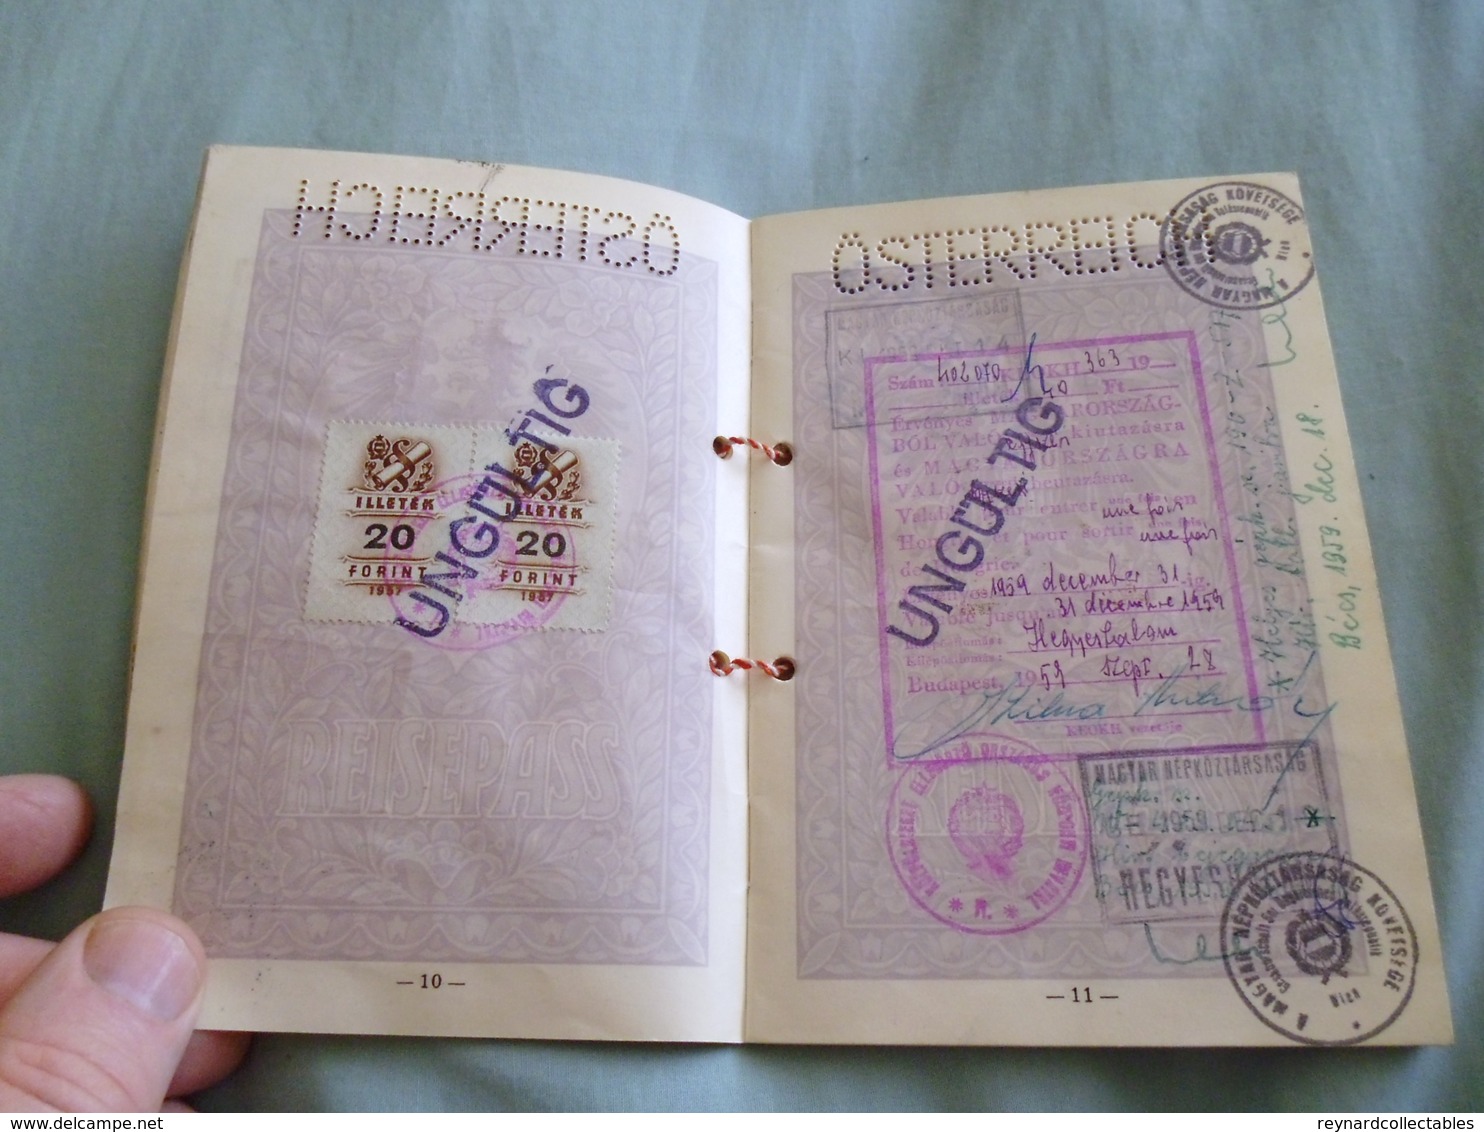 1960 Austrian Reisepass Passport, Budapest consulat.Many Hungarian fiscals/handstamps & Italy